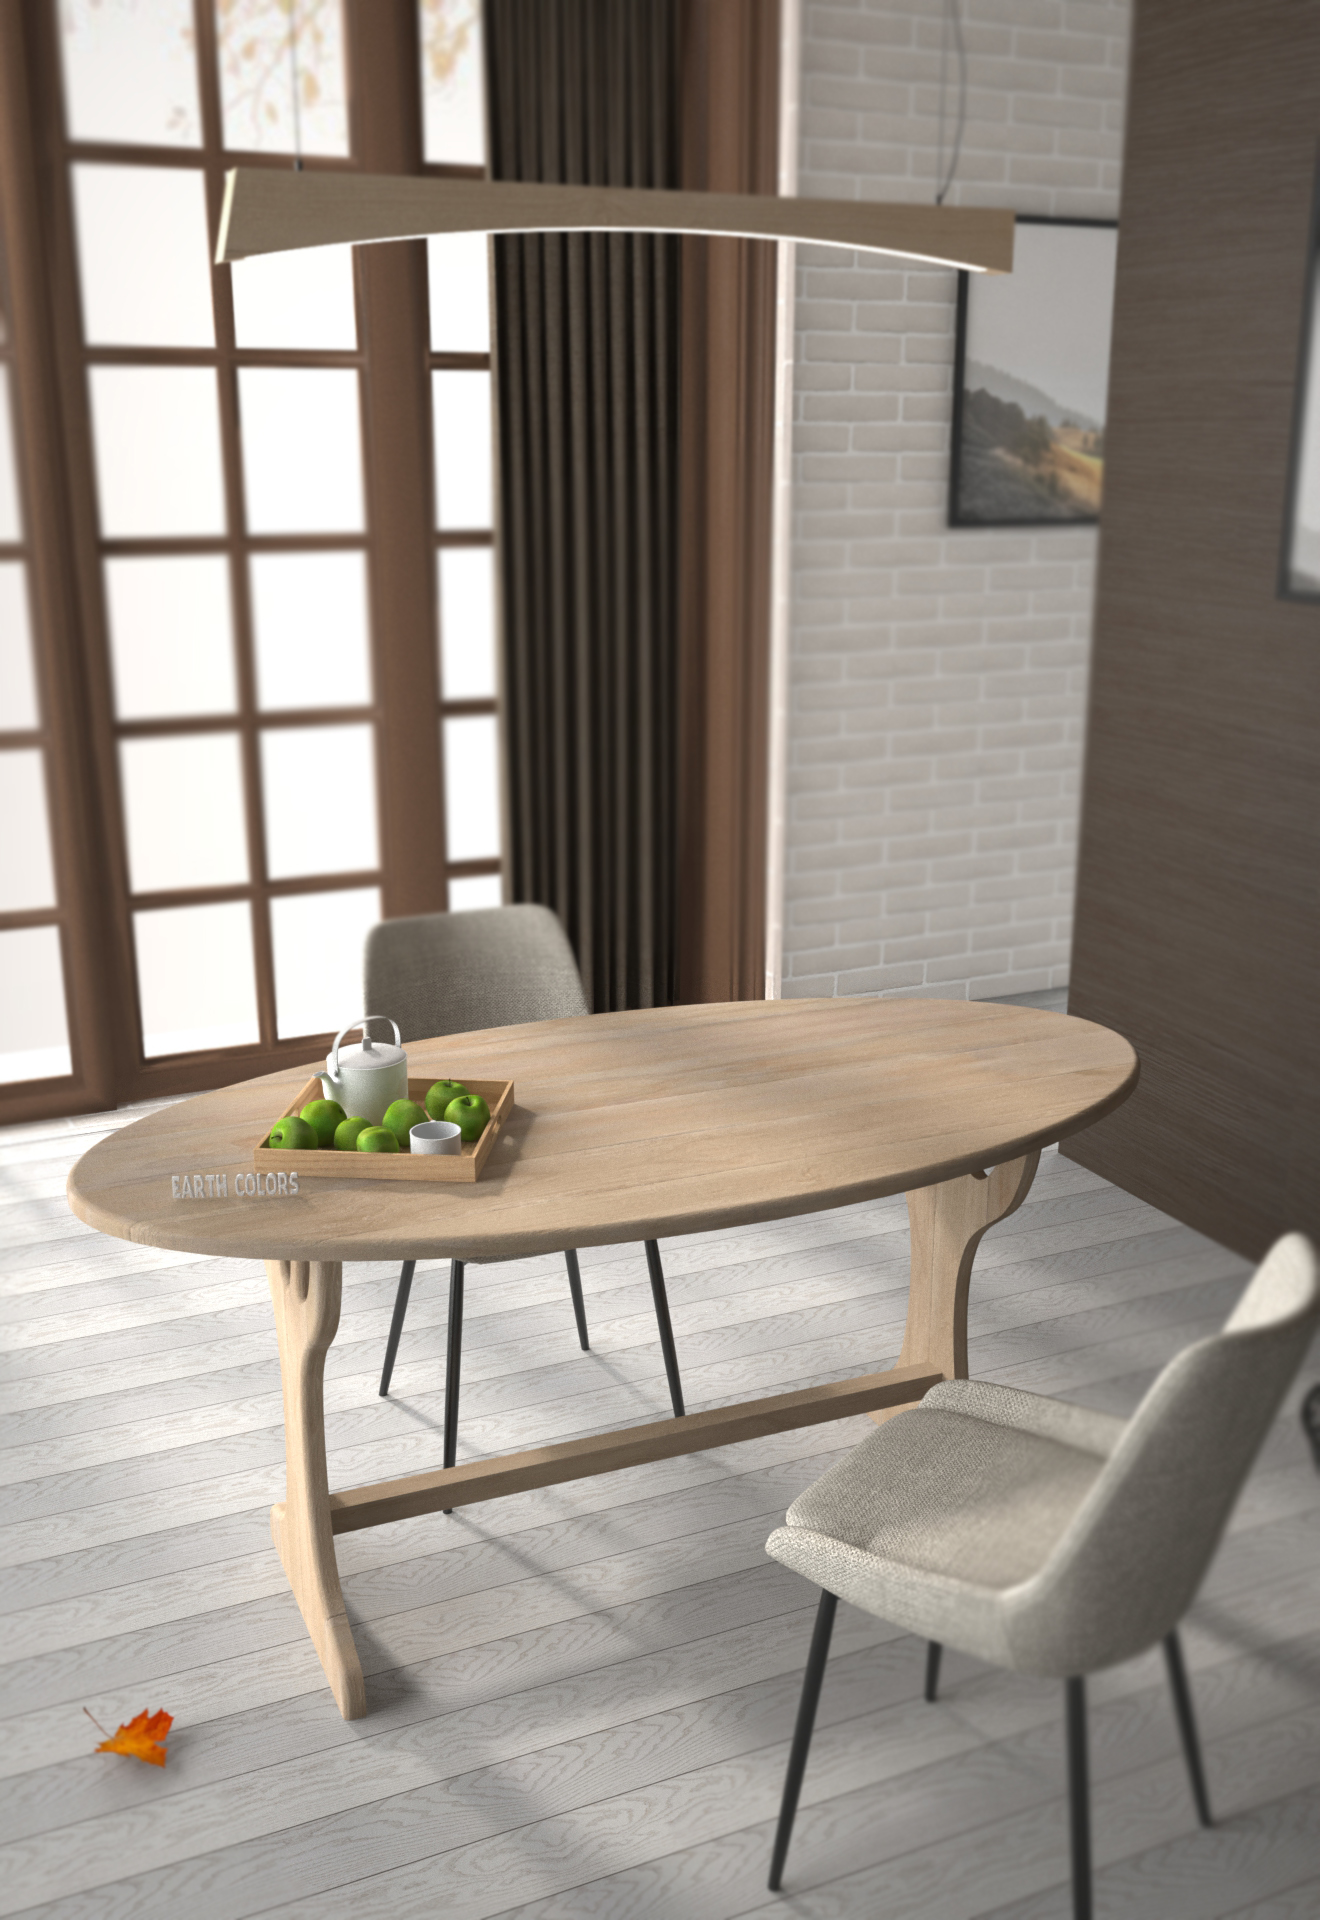 Handmade wooden dining tables